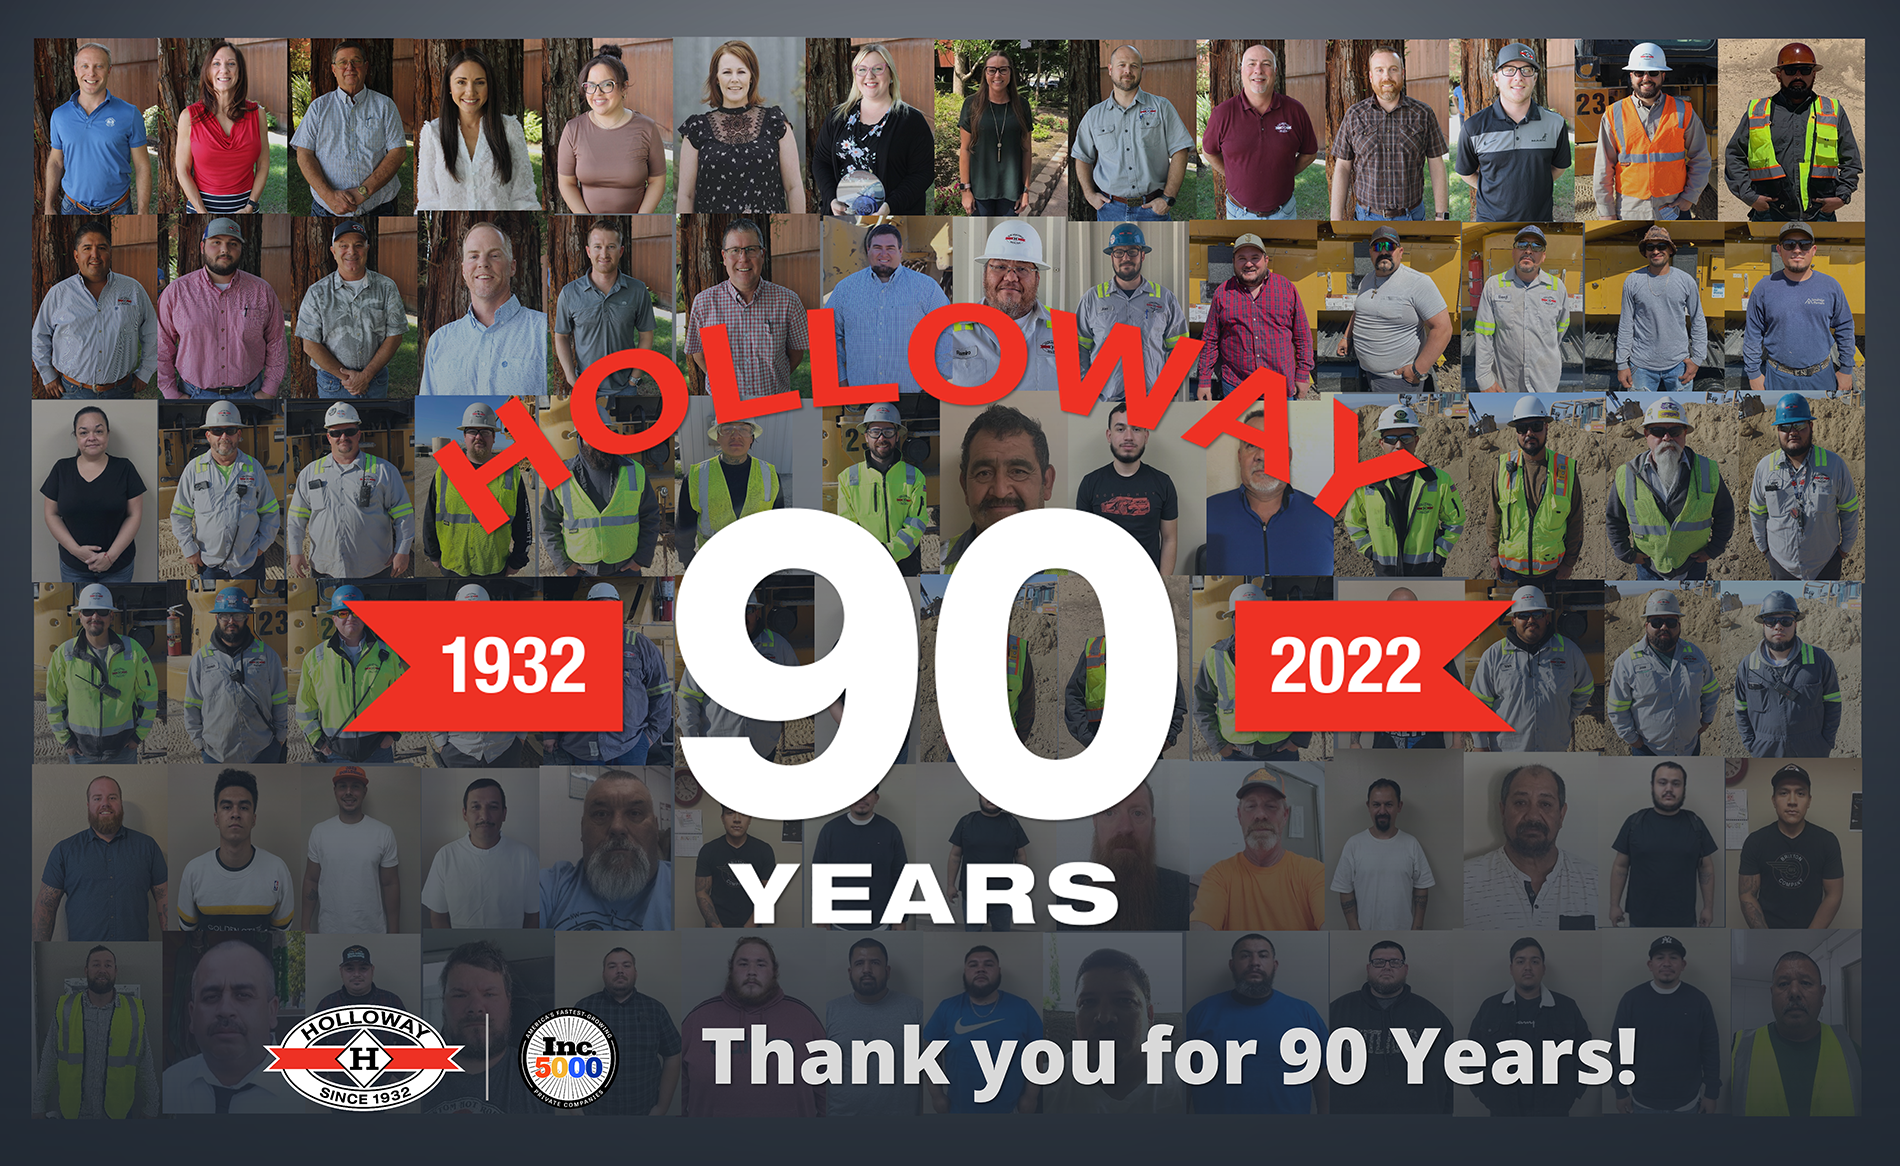 Holloway celebrates 90 years